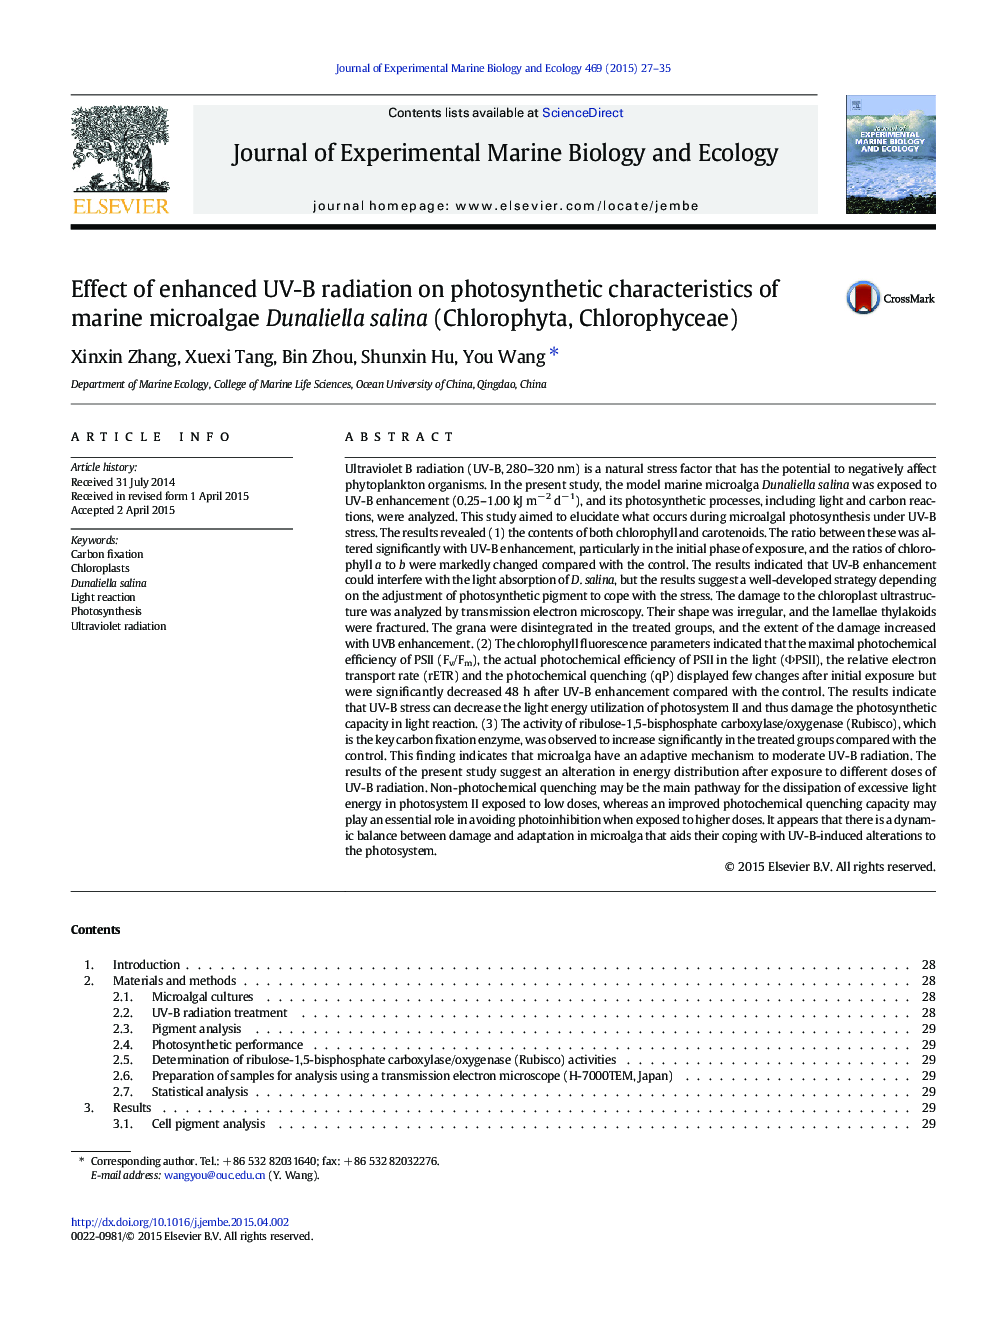 Effect of enhanced UV-B radiation on photosynthetic characteristics of marine microalgae Dunaliella salina (Chlorophyta, Chlorophyceae)